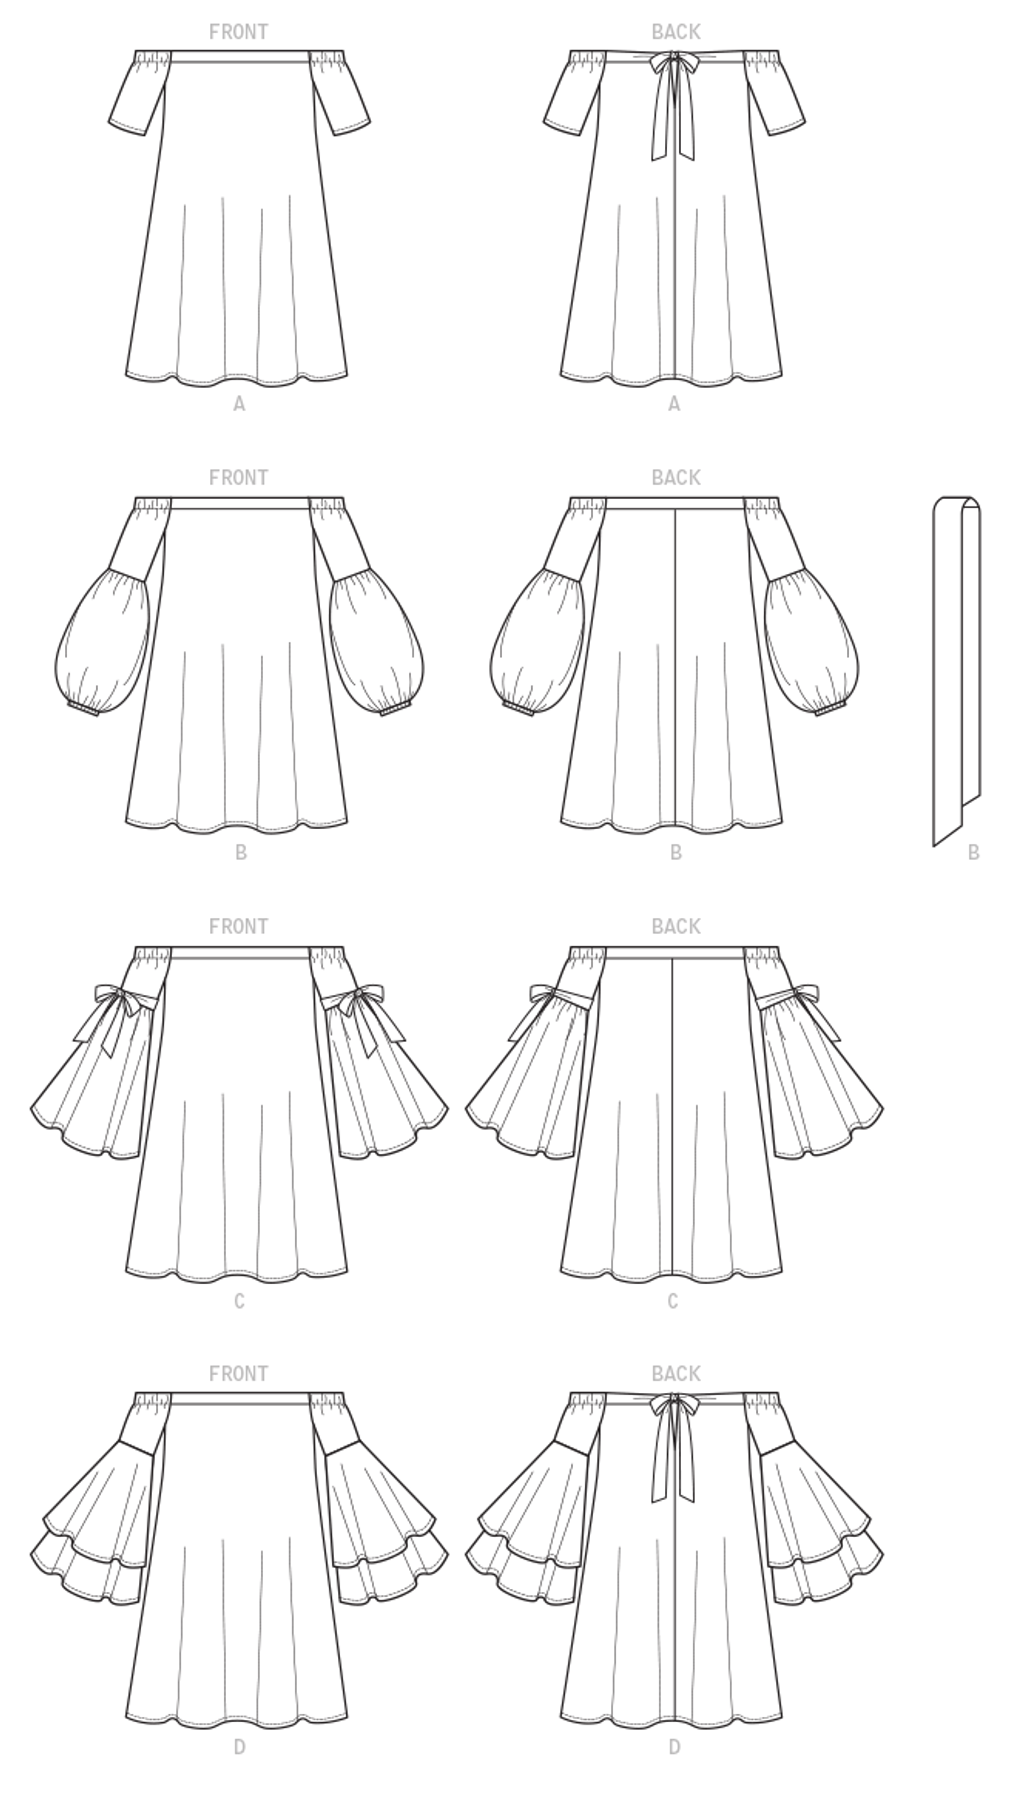 M7744 | Misses' Dresses and Belt | McCall's Patterns